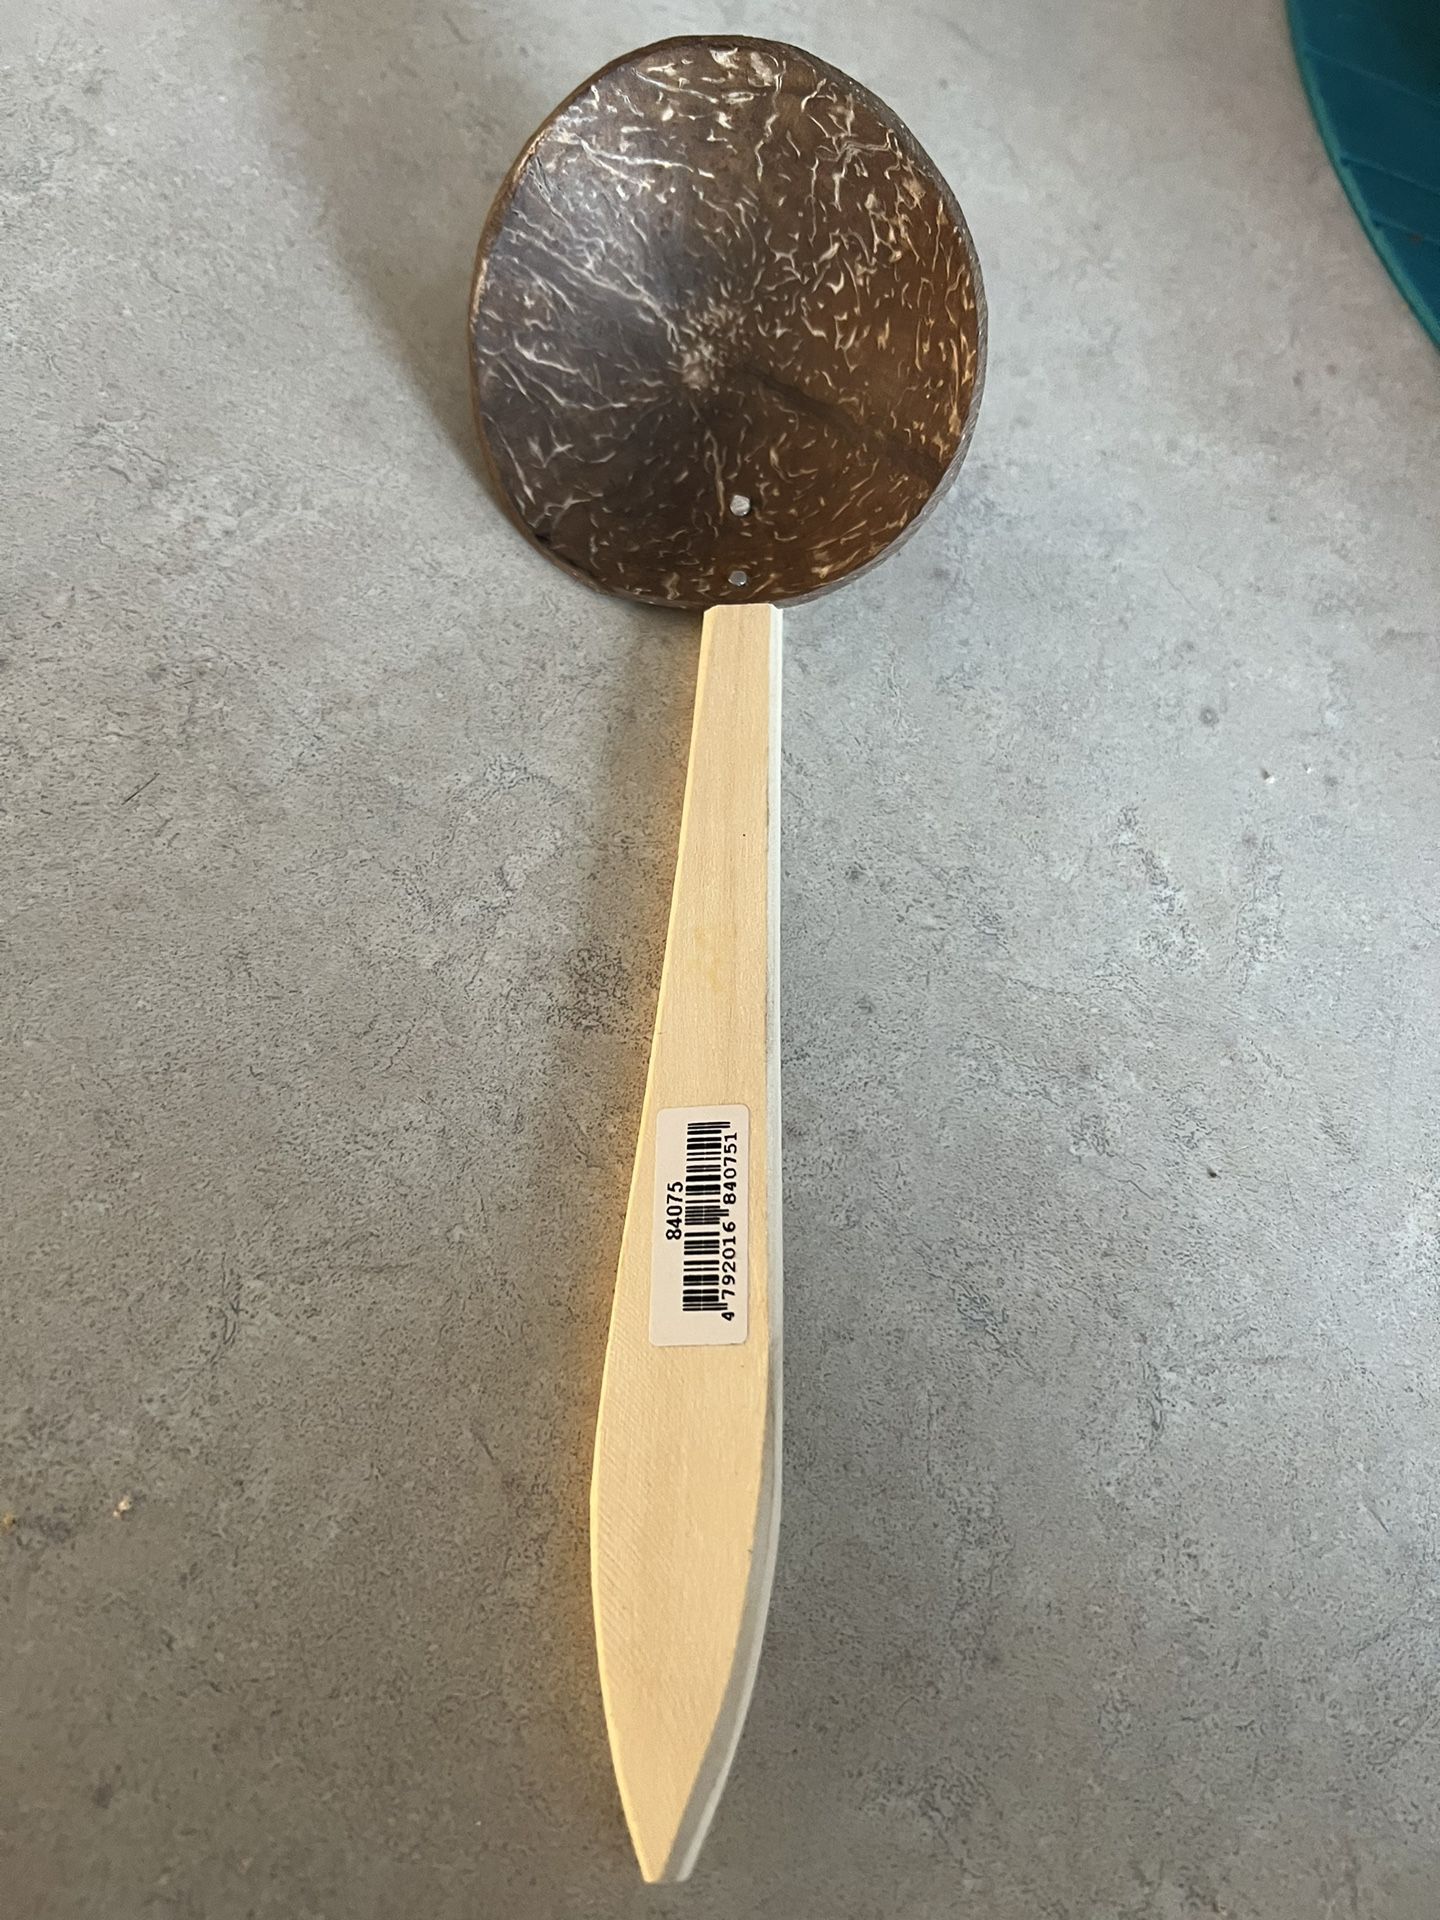 Wooden Coconut Spoon